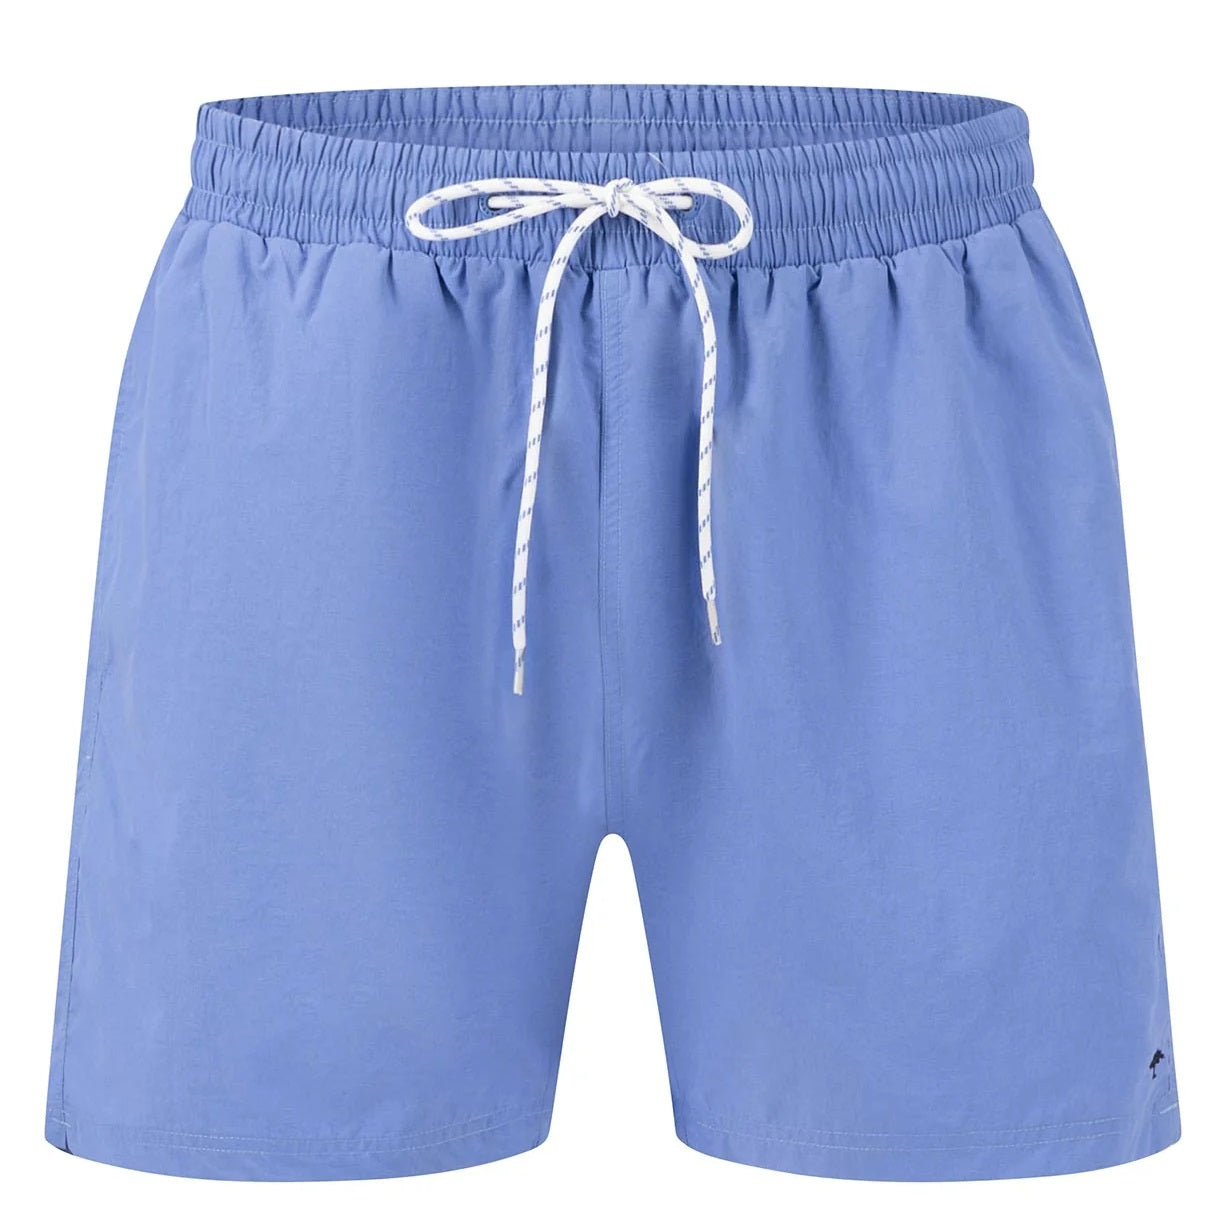 FYNCH HATTON Swim Shorts - Men's – Crystal Blue